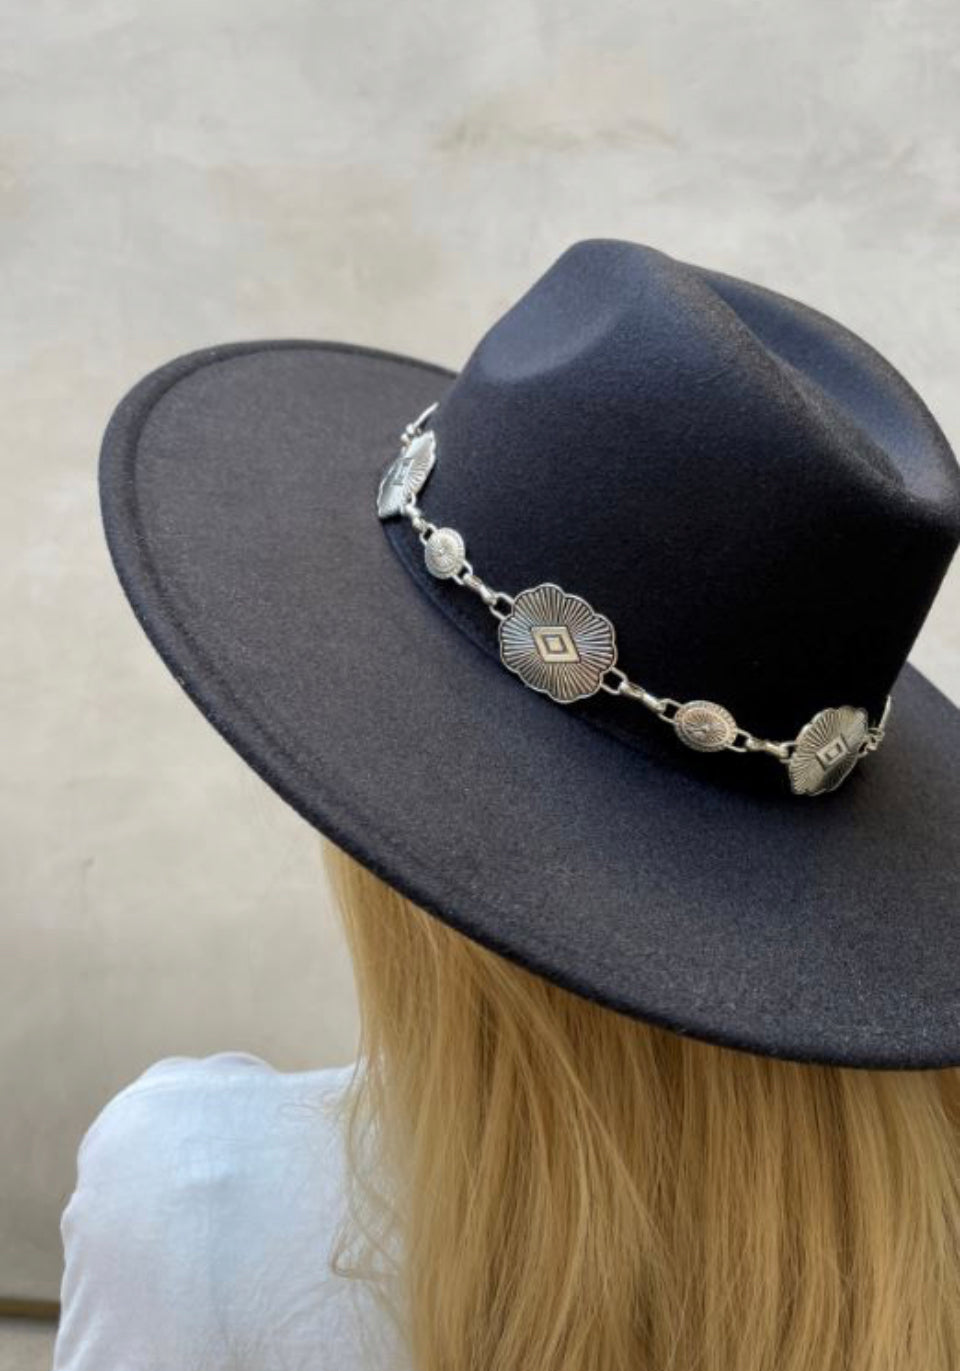 Western Chain Fedora Hat